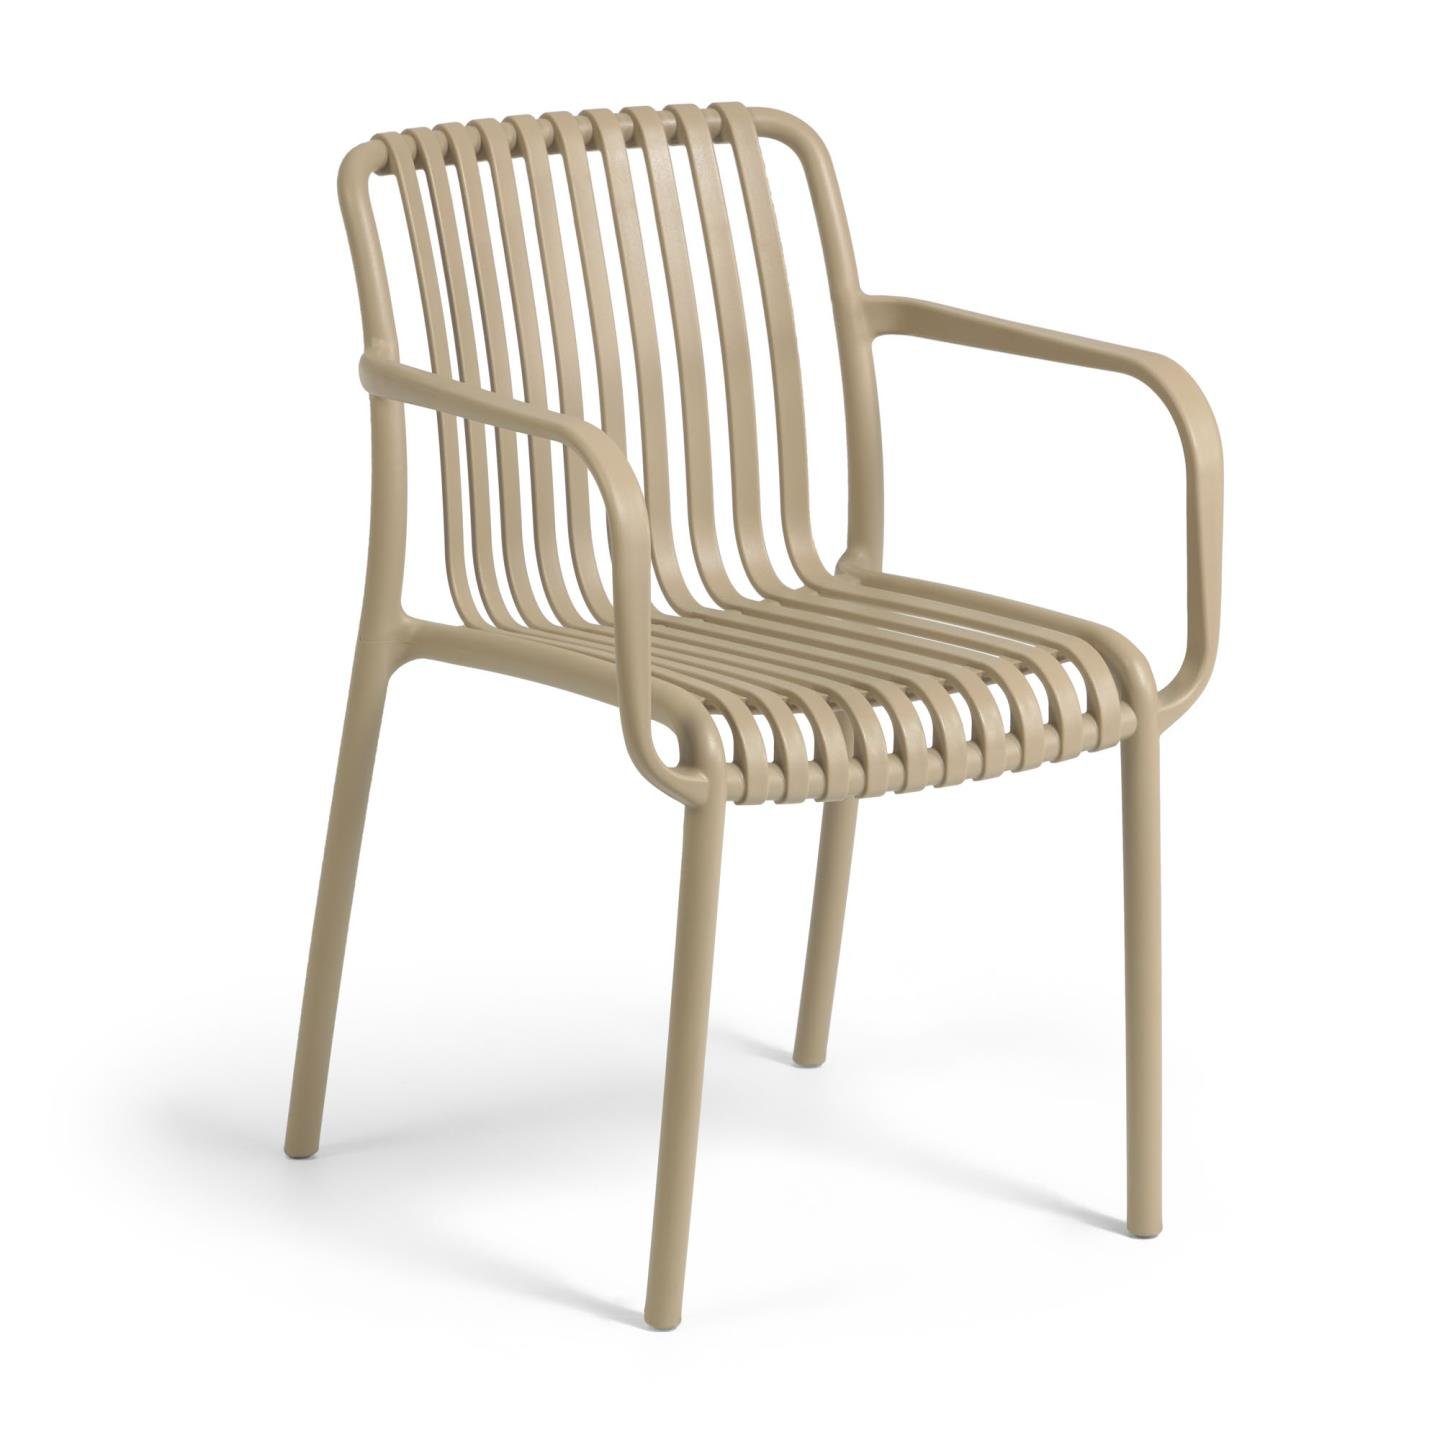 Isabellini x x 49 cm Outdoor-Stuhl 54 4er in beige 80 Set Gartenstuhl Natur24